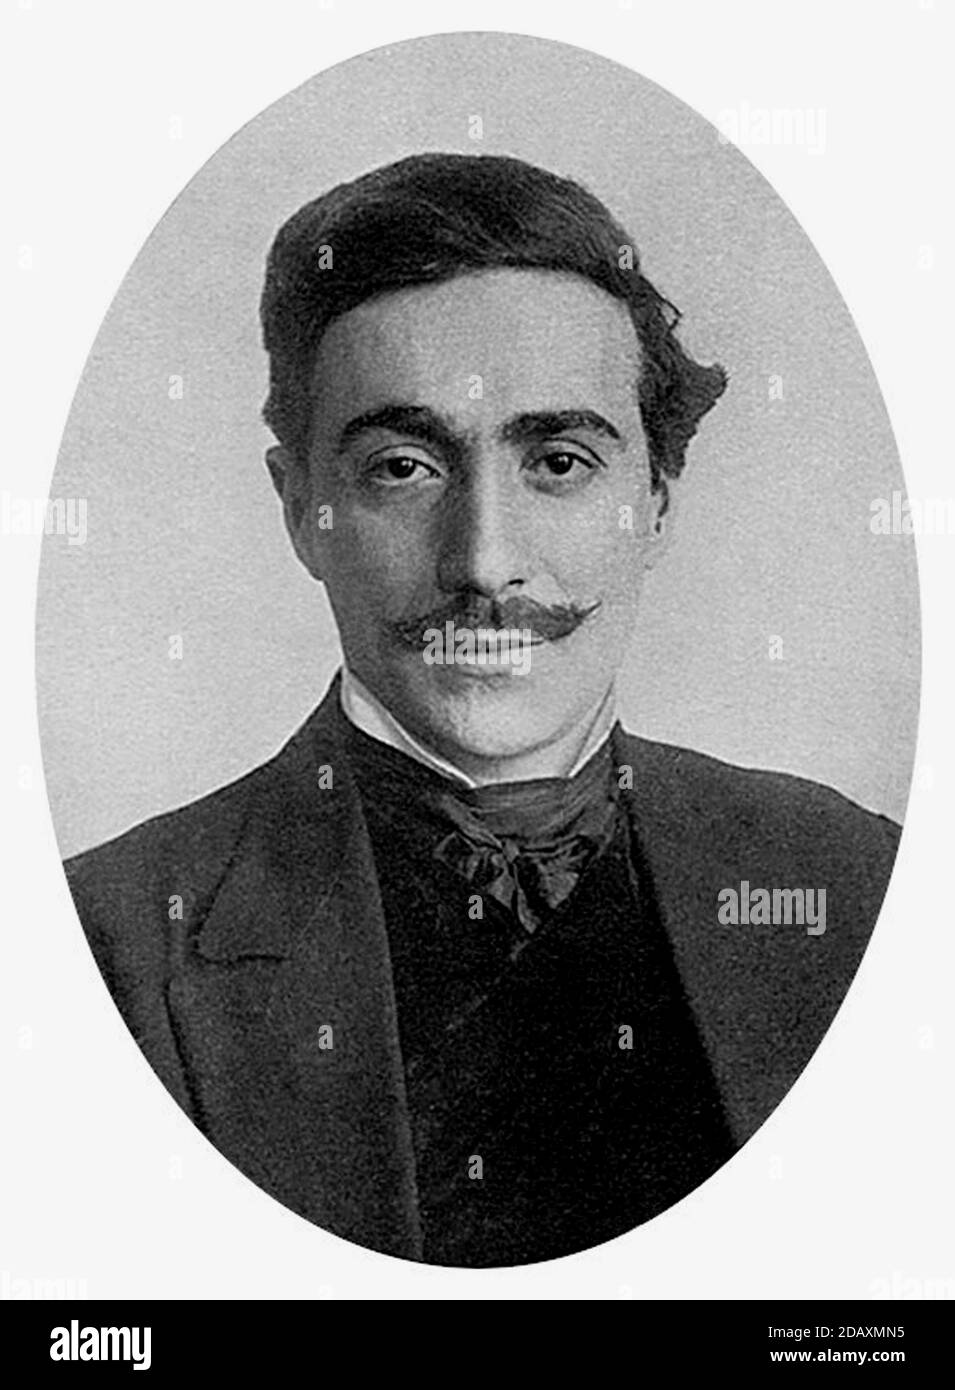 1915 , ITALIEN : die feiern italienischen Maler und Illustrator FORTUNINO MATANIA ( 1881 - 1963 ). UNBEKANNTER FOTOGRAF .- PORTRAIT - RITRATTO - ILLUSTRATORE - ILLUSTRATOR - ARTE - VISUAL ARTS - ARTI VISIVE - PITTORE - PITTORE - BAFFI - SCHNURRBART --- ARCHIVIO GBB Stockfoto